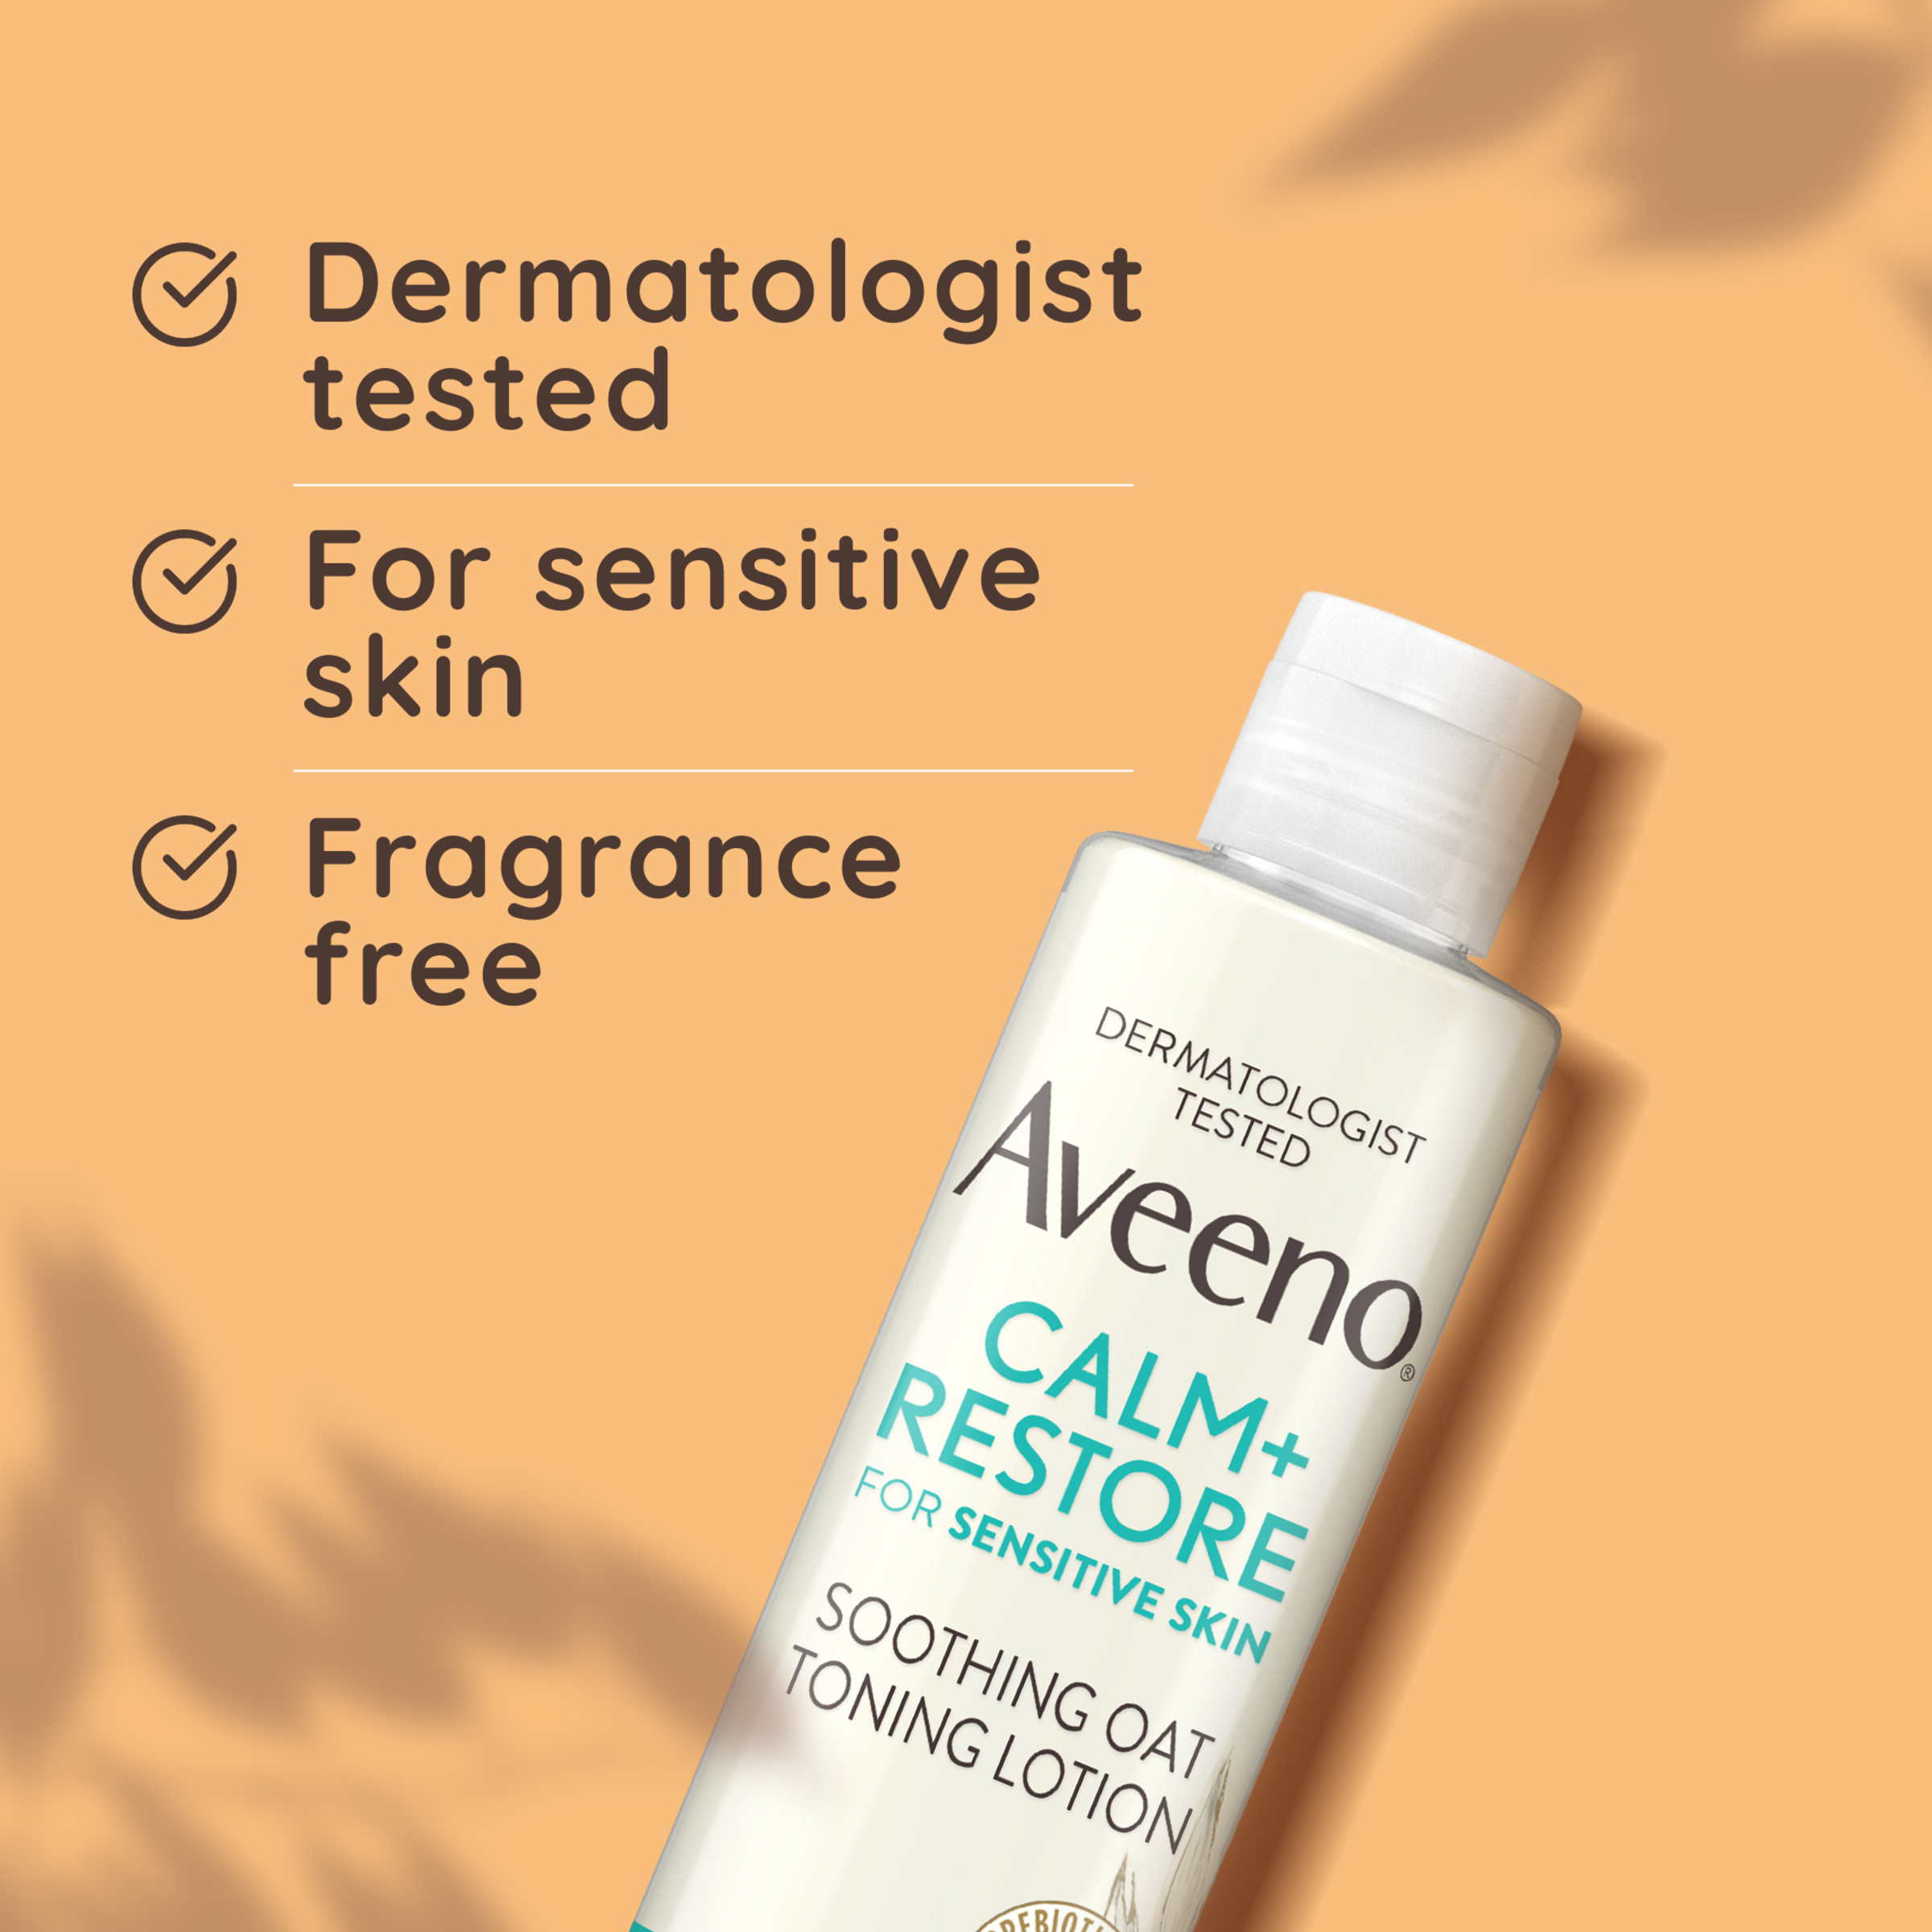 dermatologist tested for sensitive skin and fragrance free